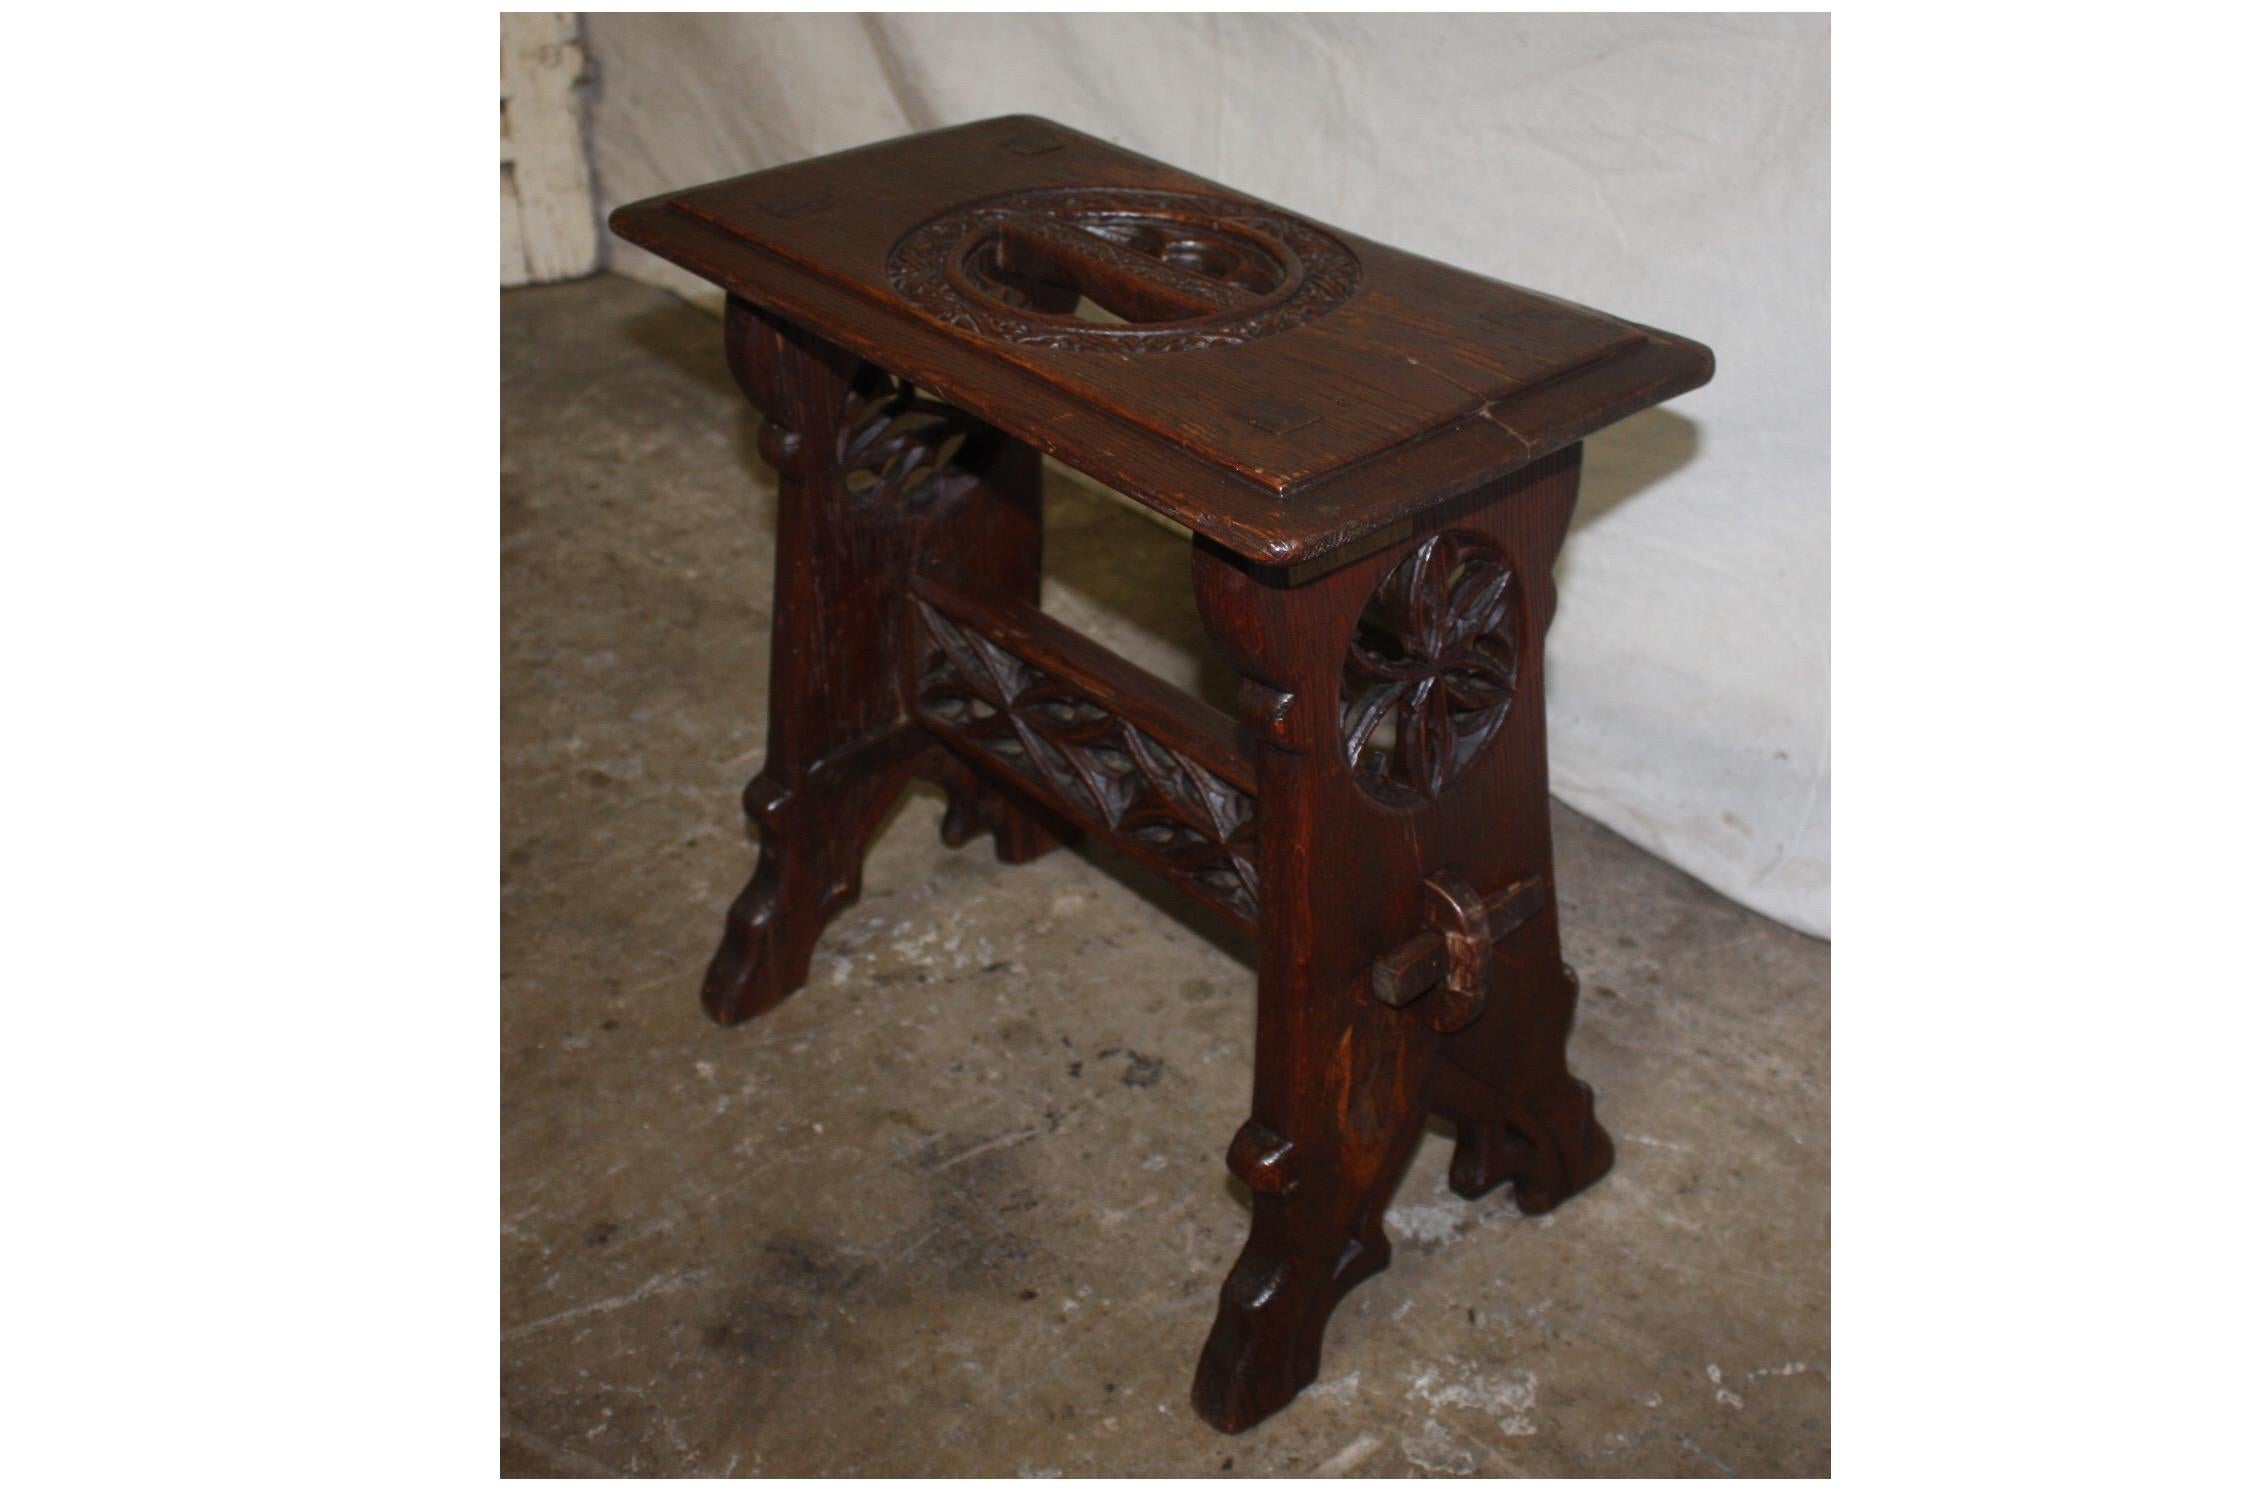 Spanish 18th century stool.